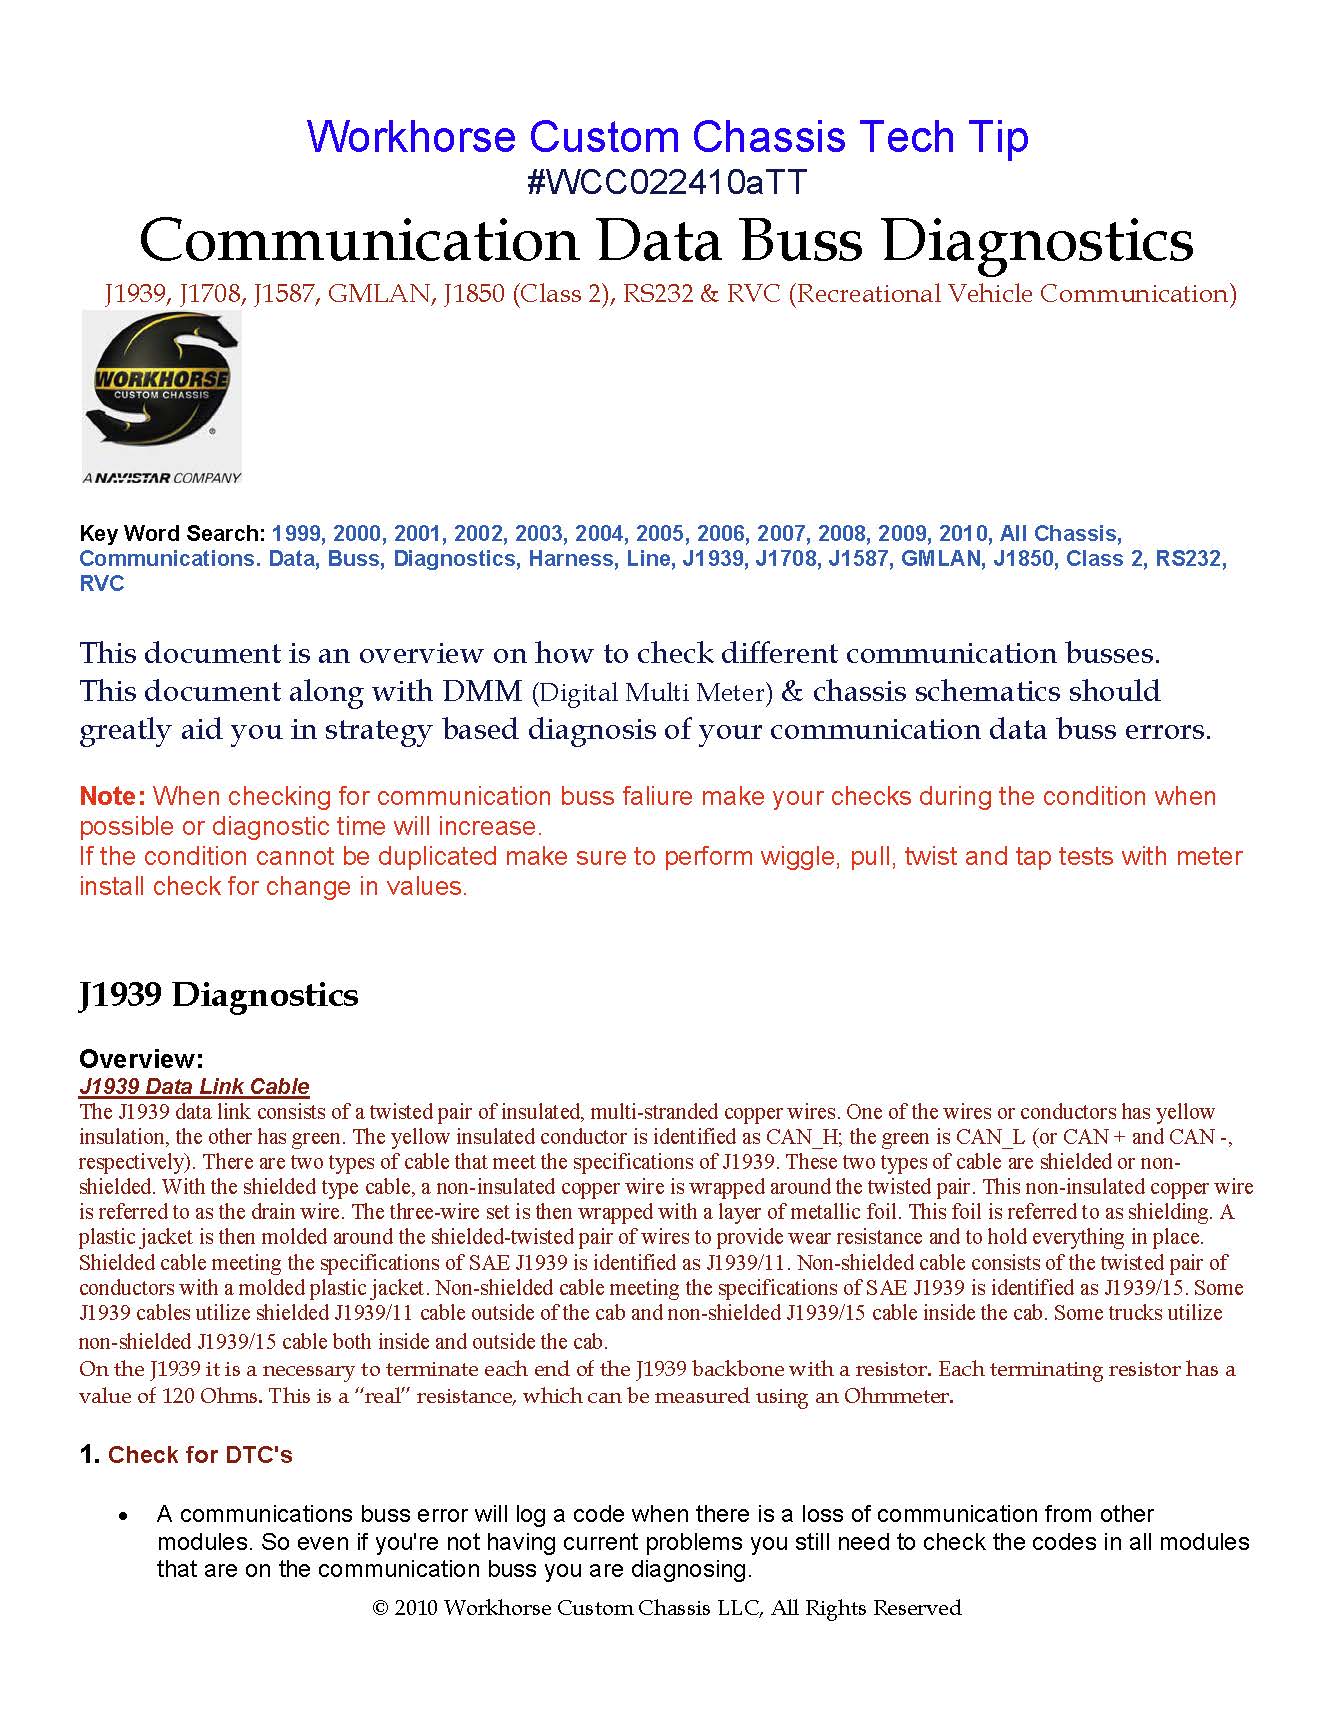 DataBus_Diagnostic_Page_1.jpg